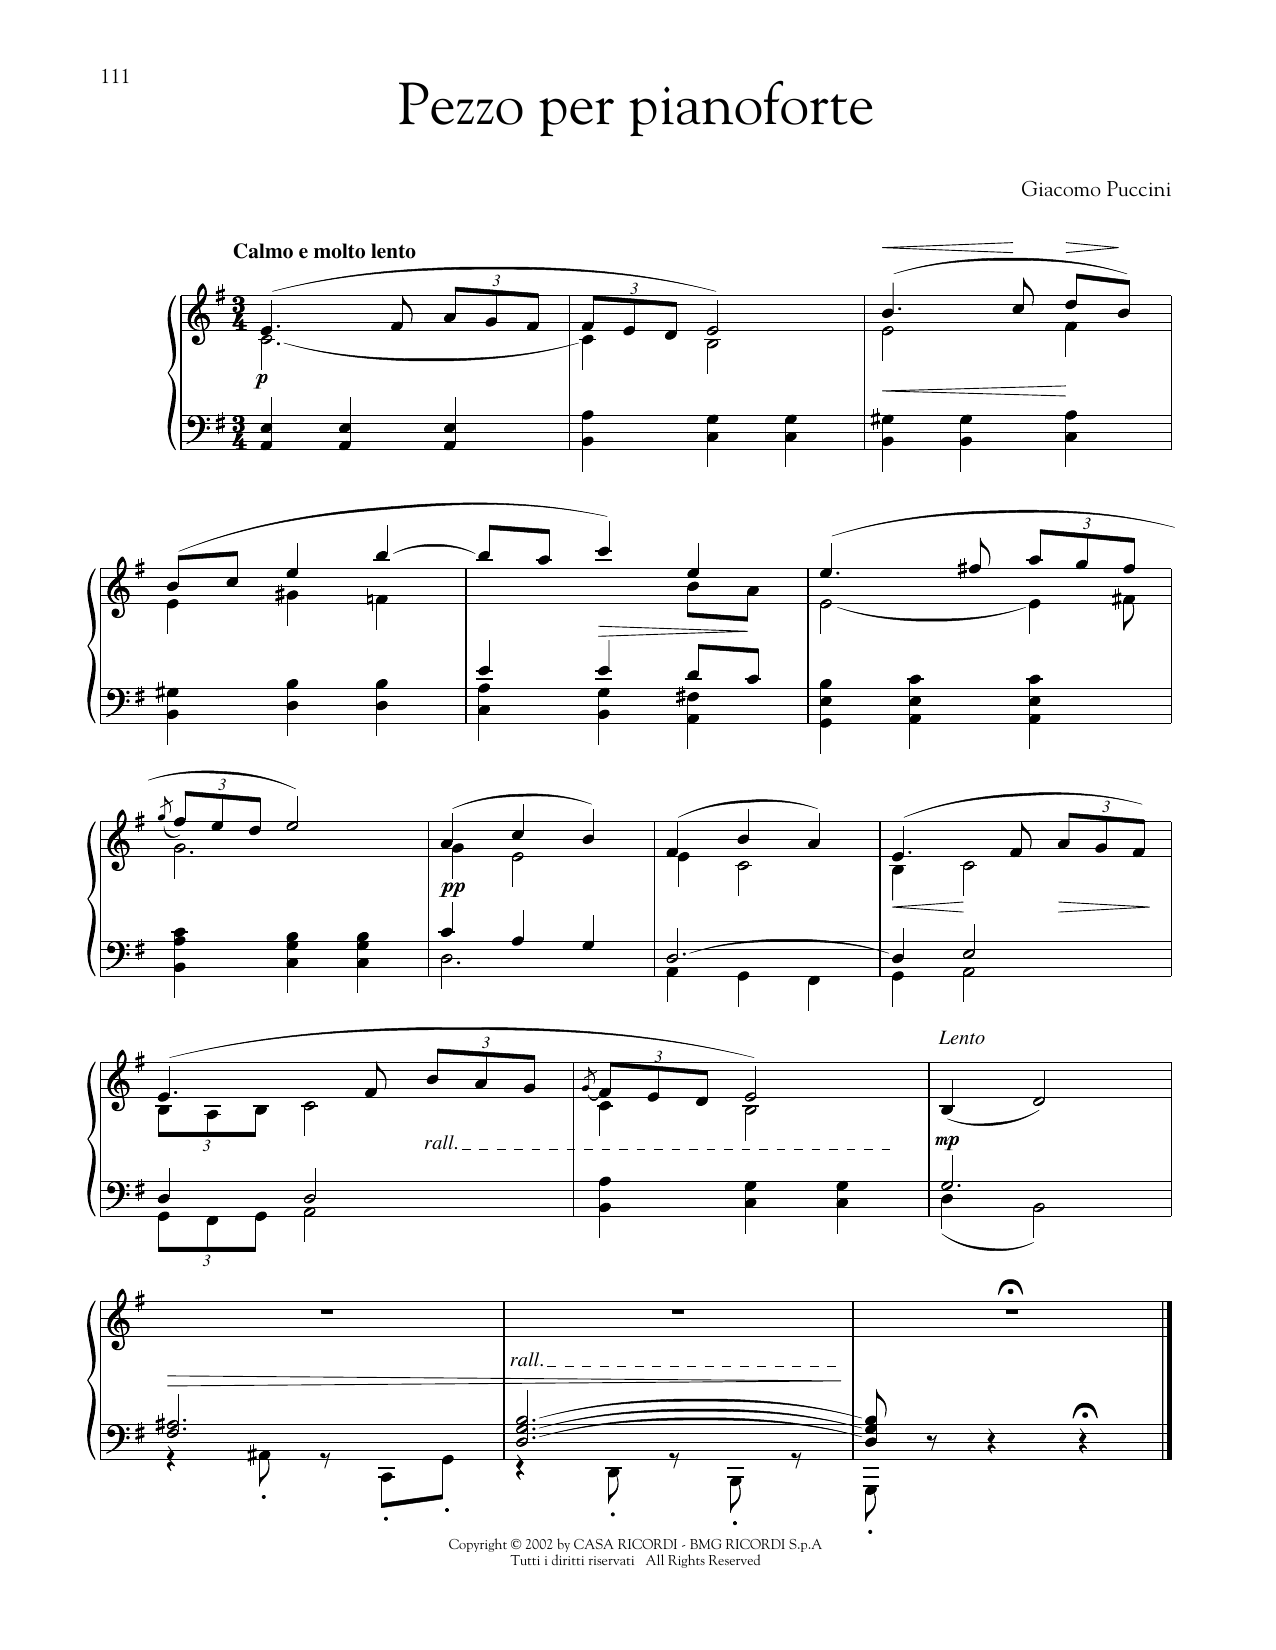 Giacomo Puccini Pezzo per pianoforte (Piano Piece) Sheet Music Notes & Chords for Piano Solo - Download or Print PDF